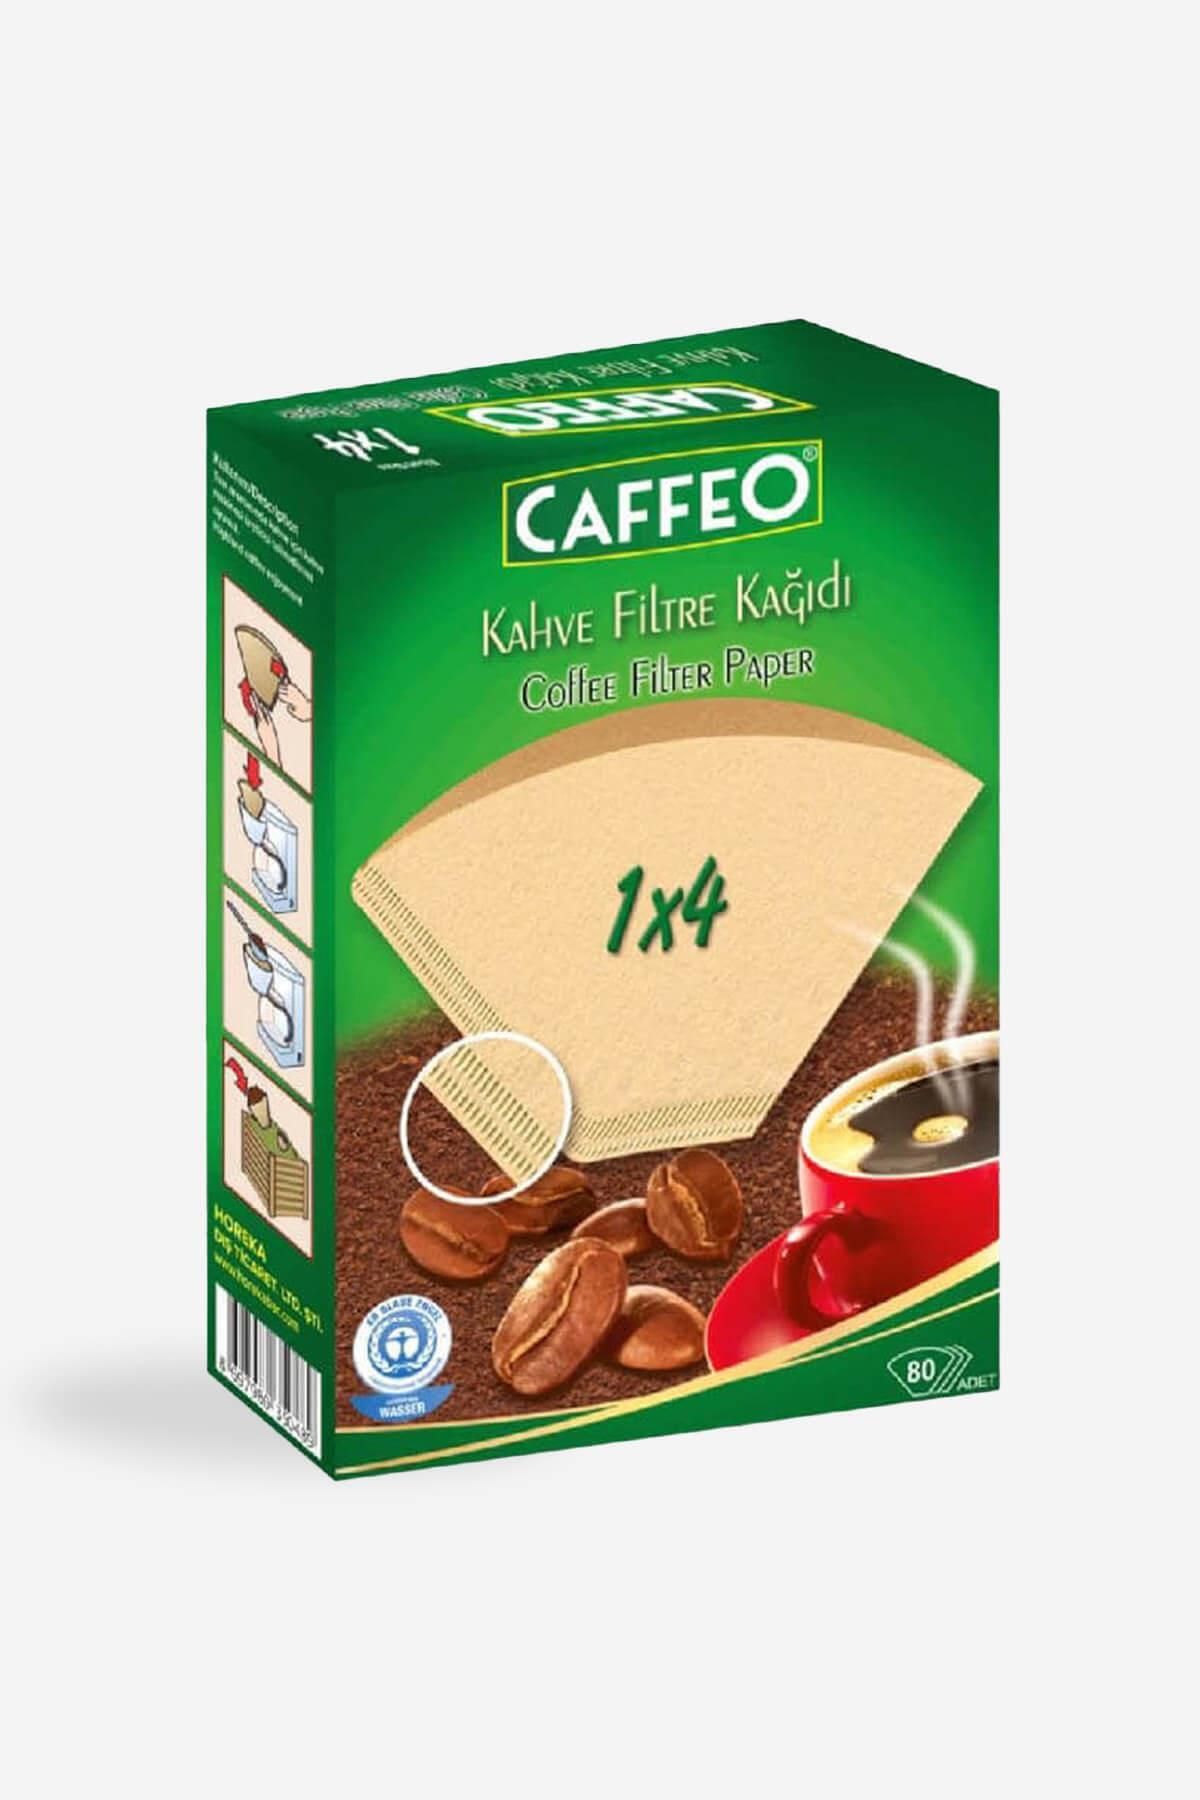 Caffeo Kahve Filtre Kağıdı 1x4 80 Adet | Ağartılmamış Doğal Kağıt